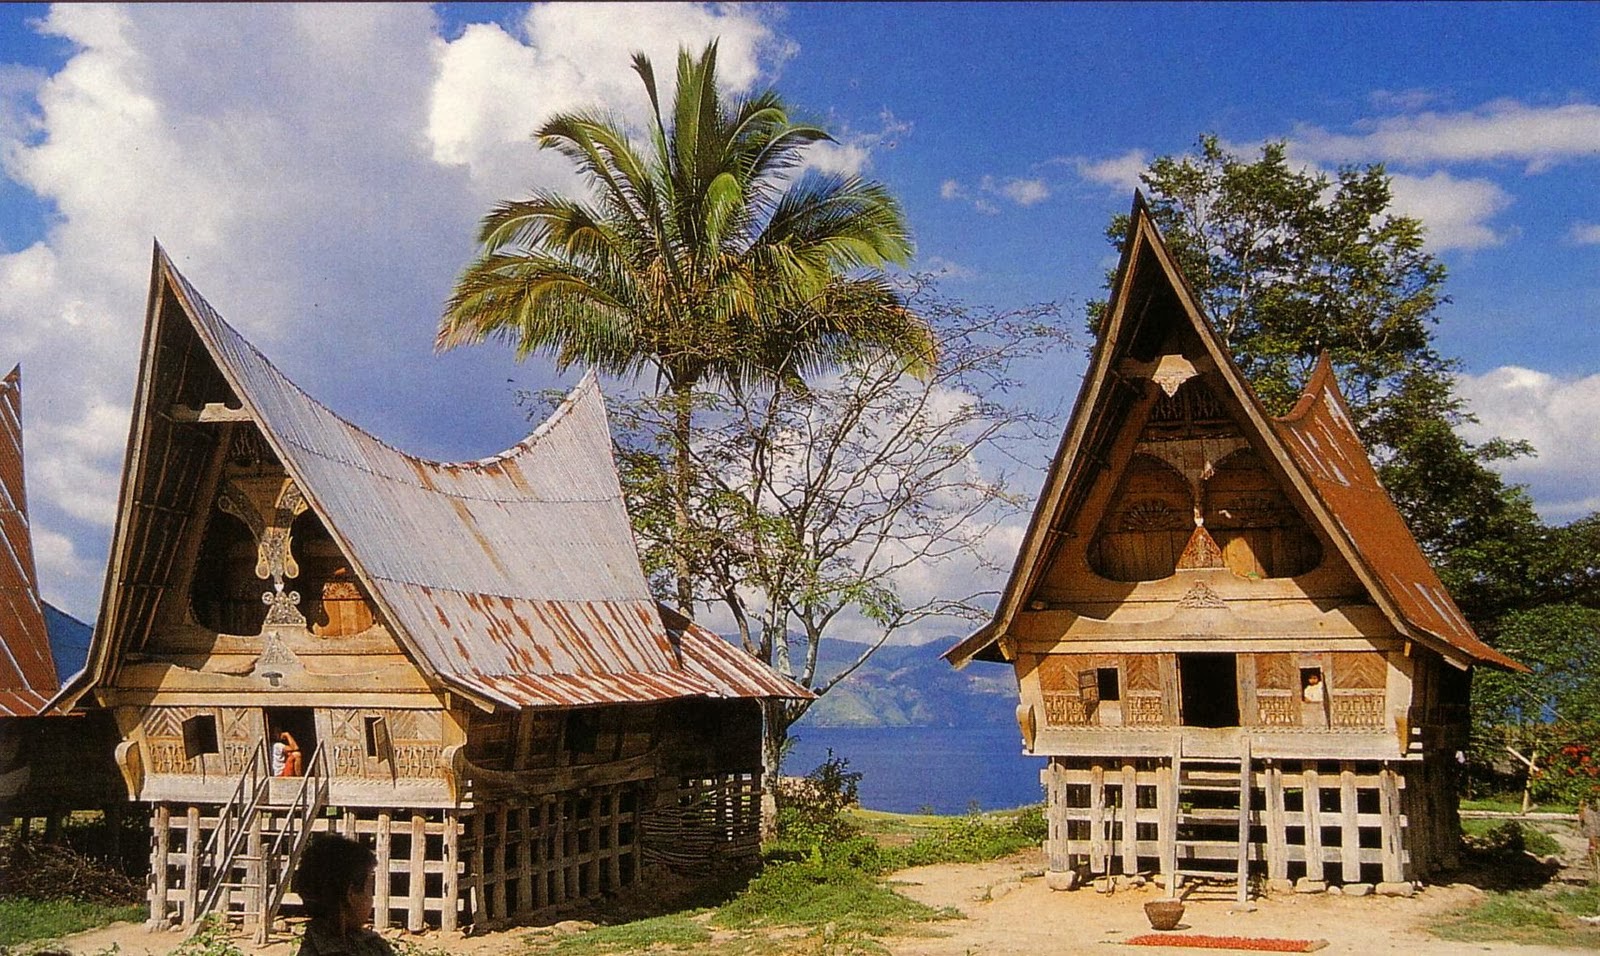  Indonesia sungguh kaya baik alamnya maupun budayanya Rumah Susila Di Indonesia